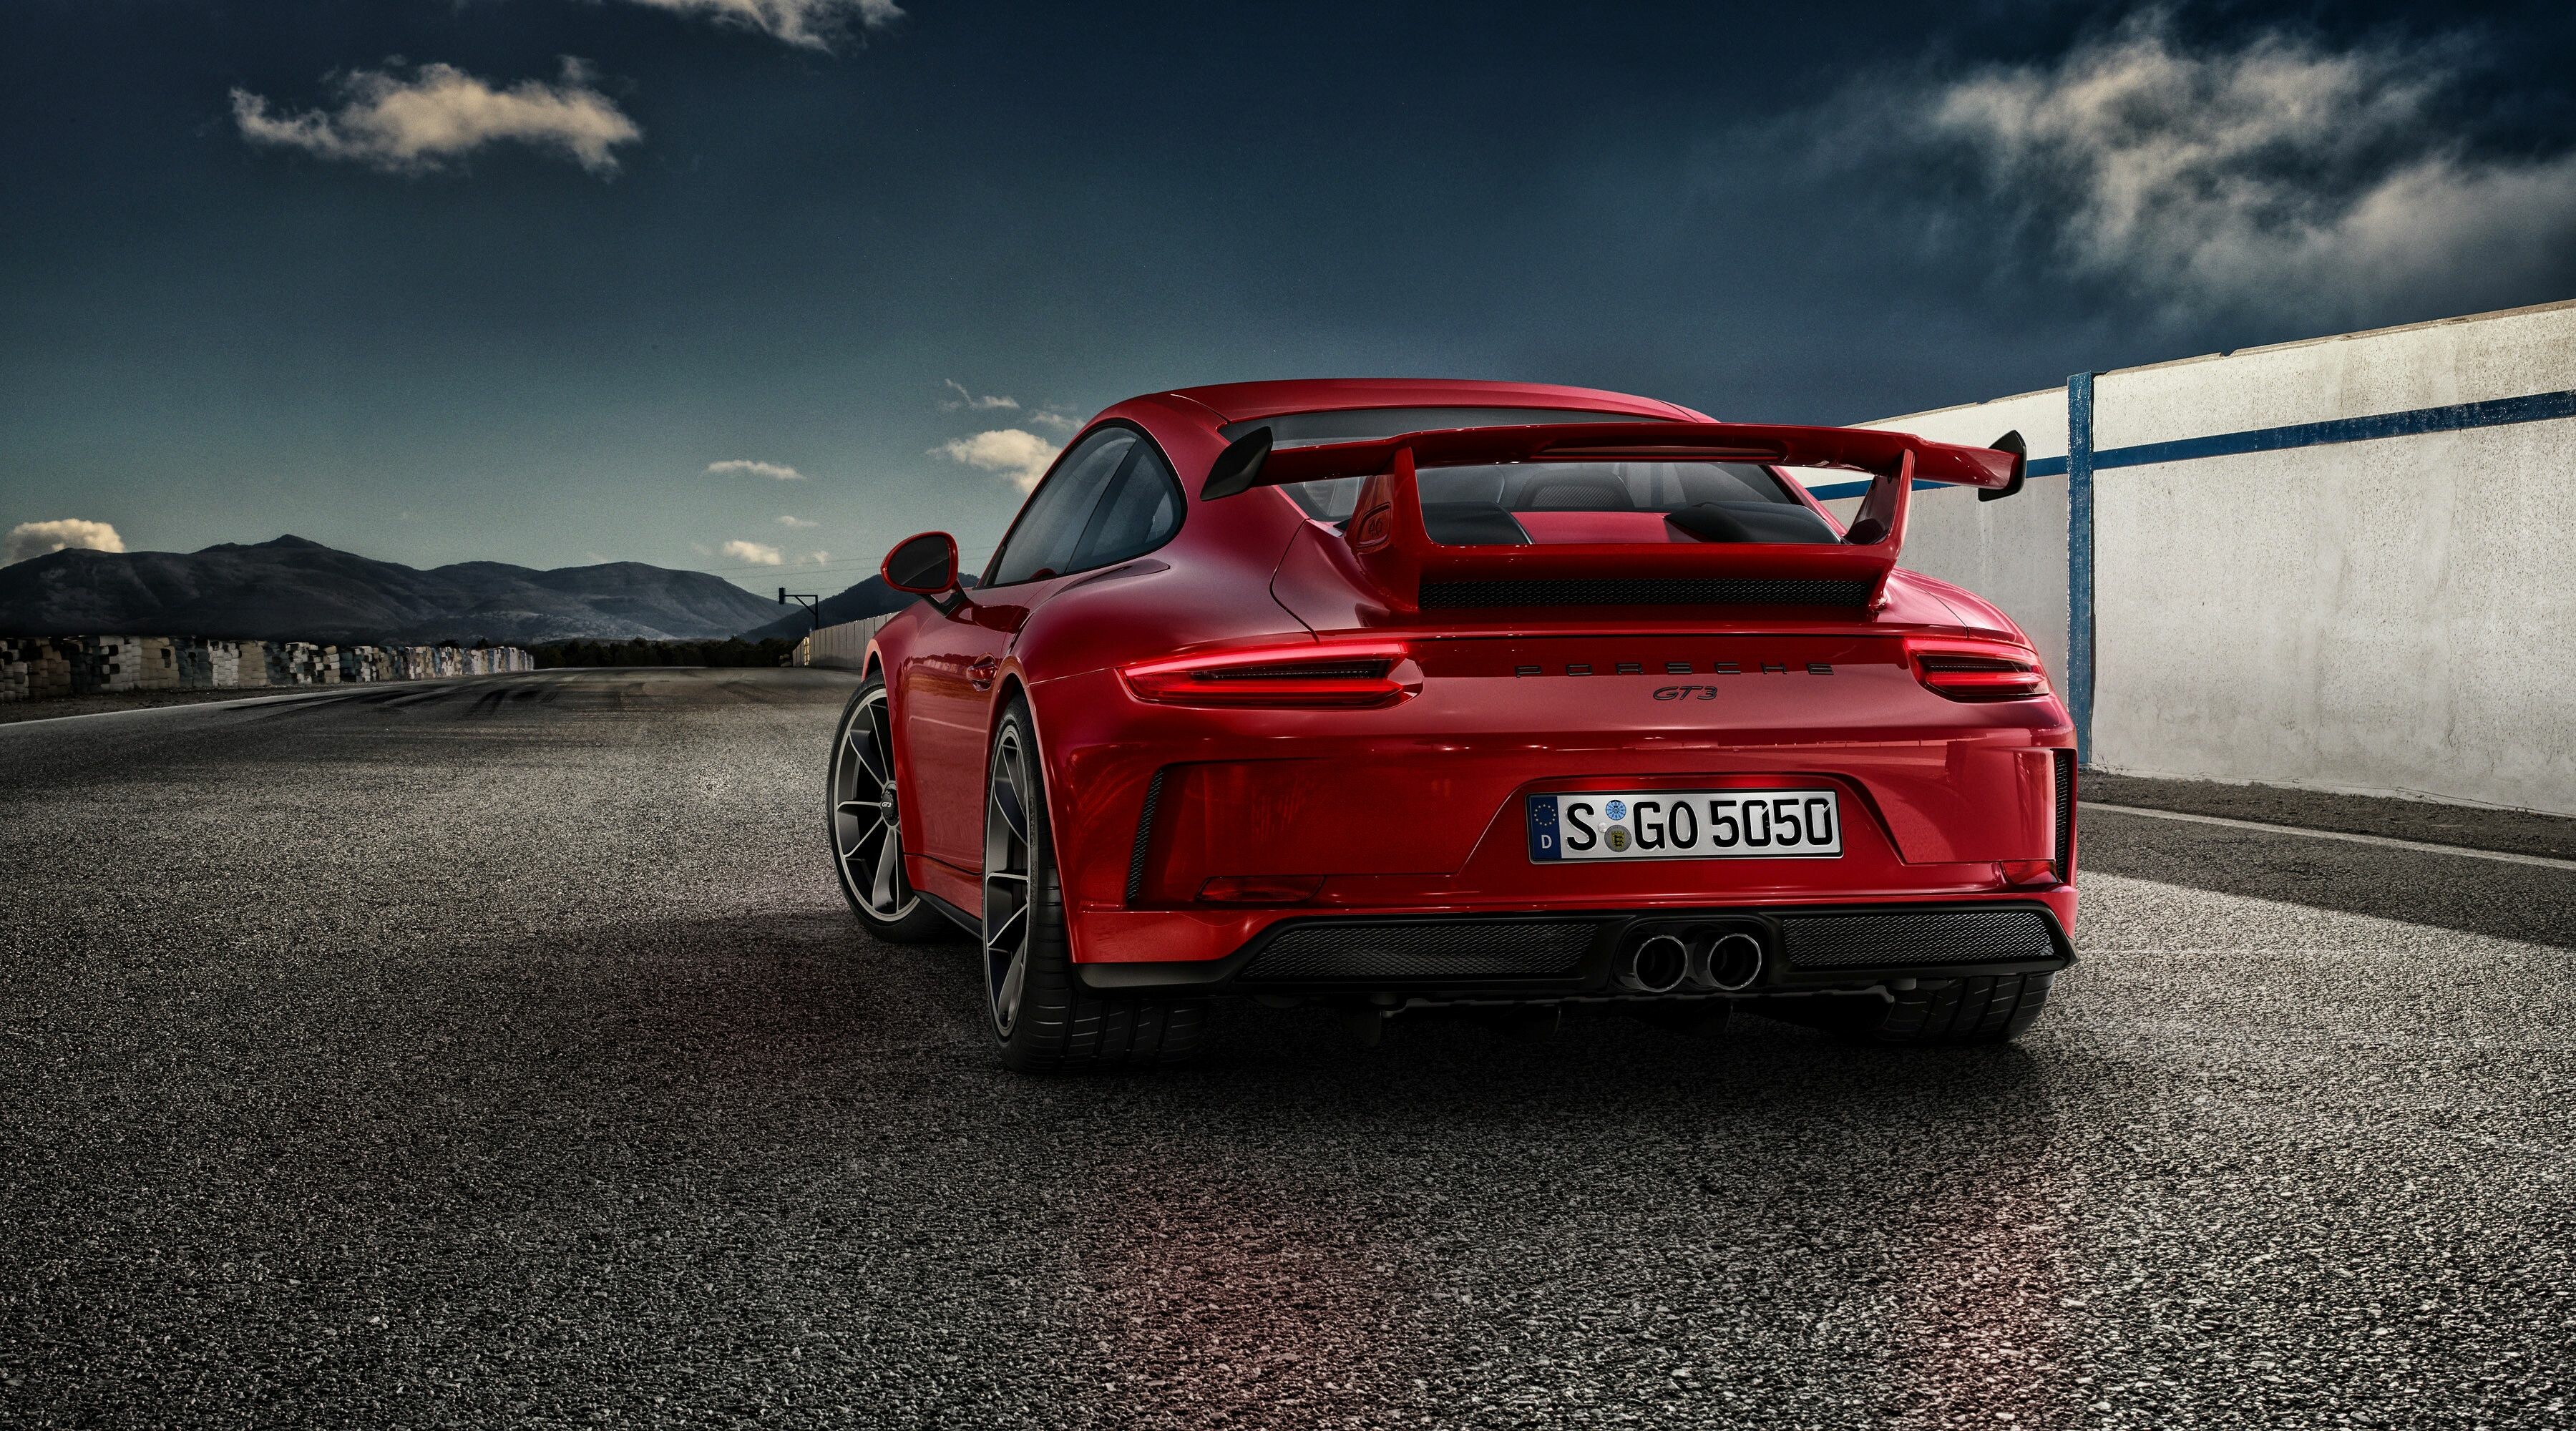 Porsche GT3 wallpapers, Top quality, High-resolution images, Free download, 3600x2000 HD Desktop